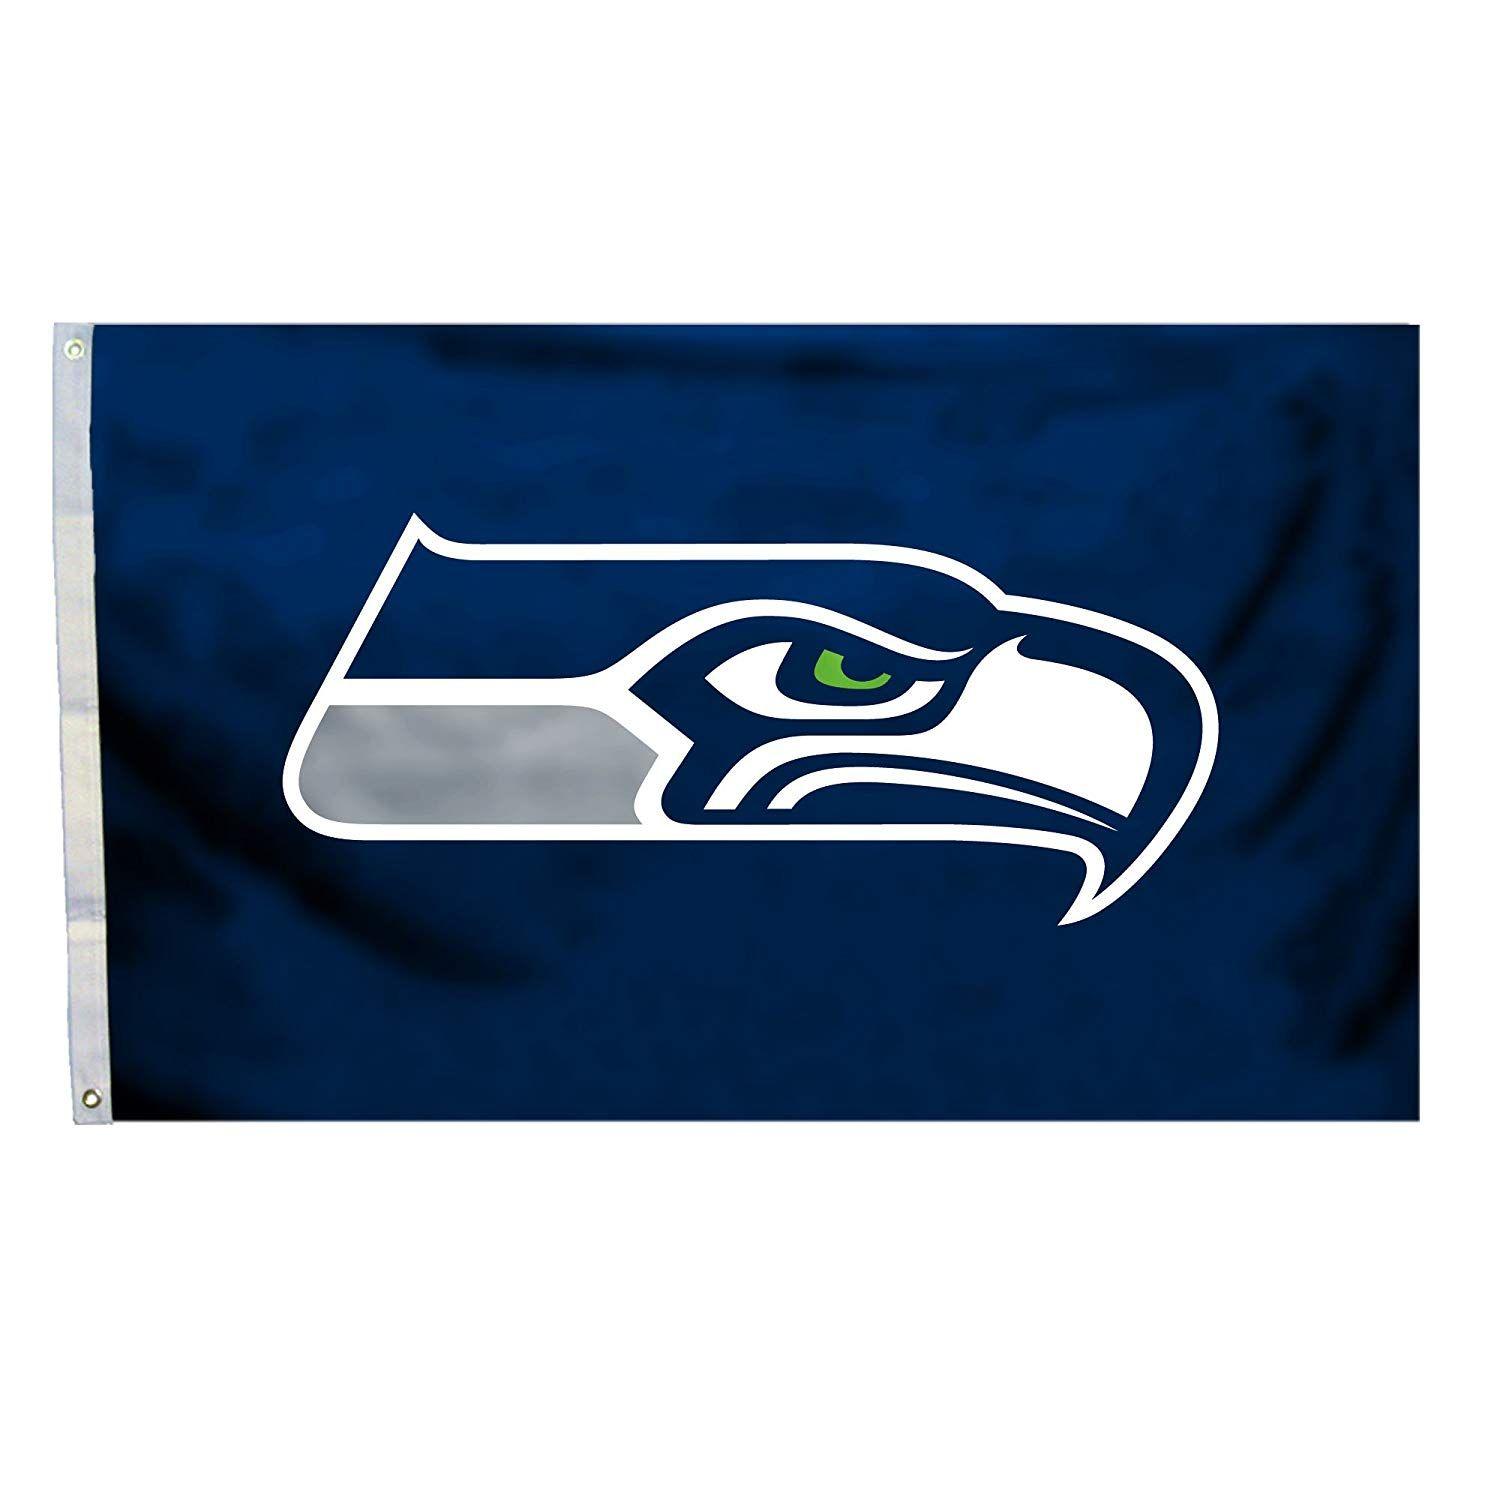 NFL Seahawks Logo - Amazon.com : NFL SEAHAWKS LOGO 3X5 FLAG : Outdoor Flags : Sports